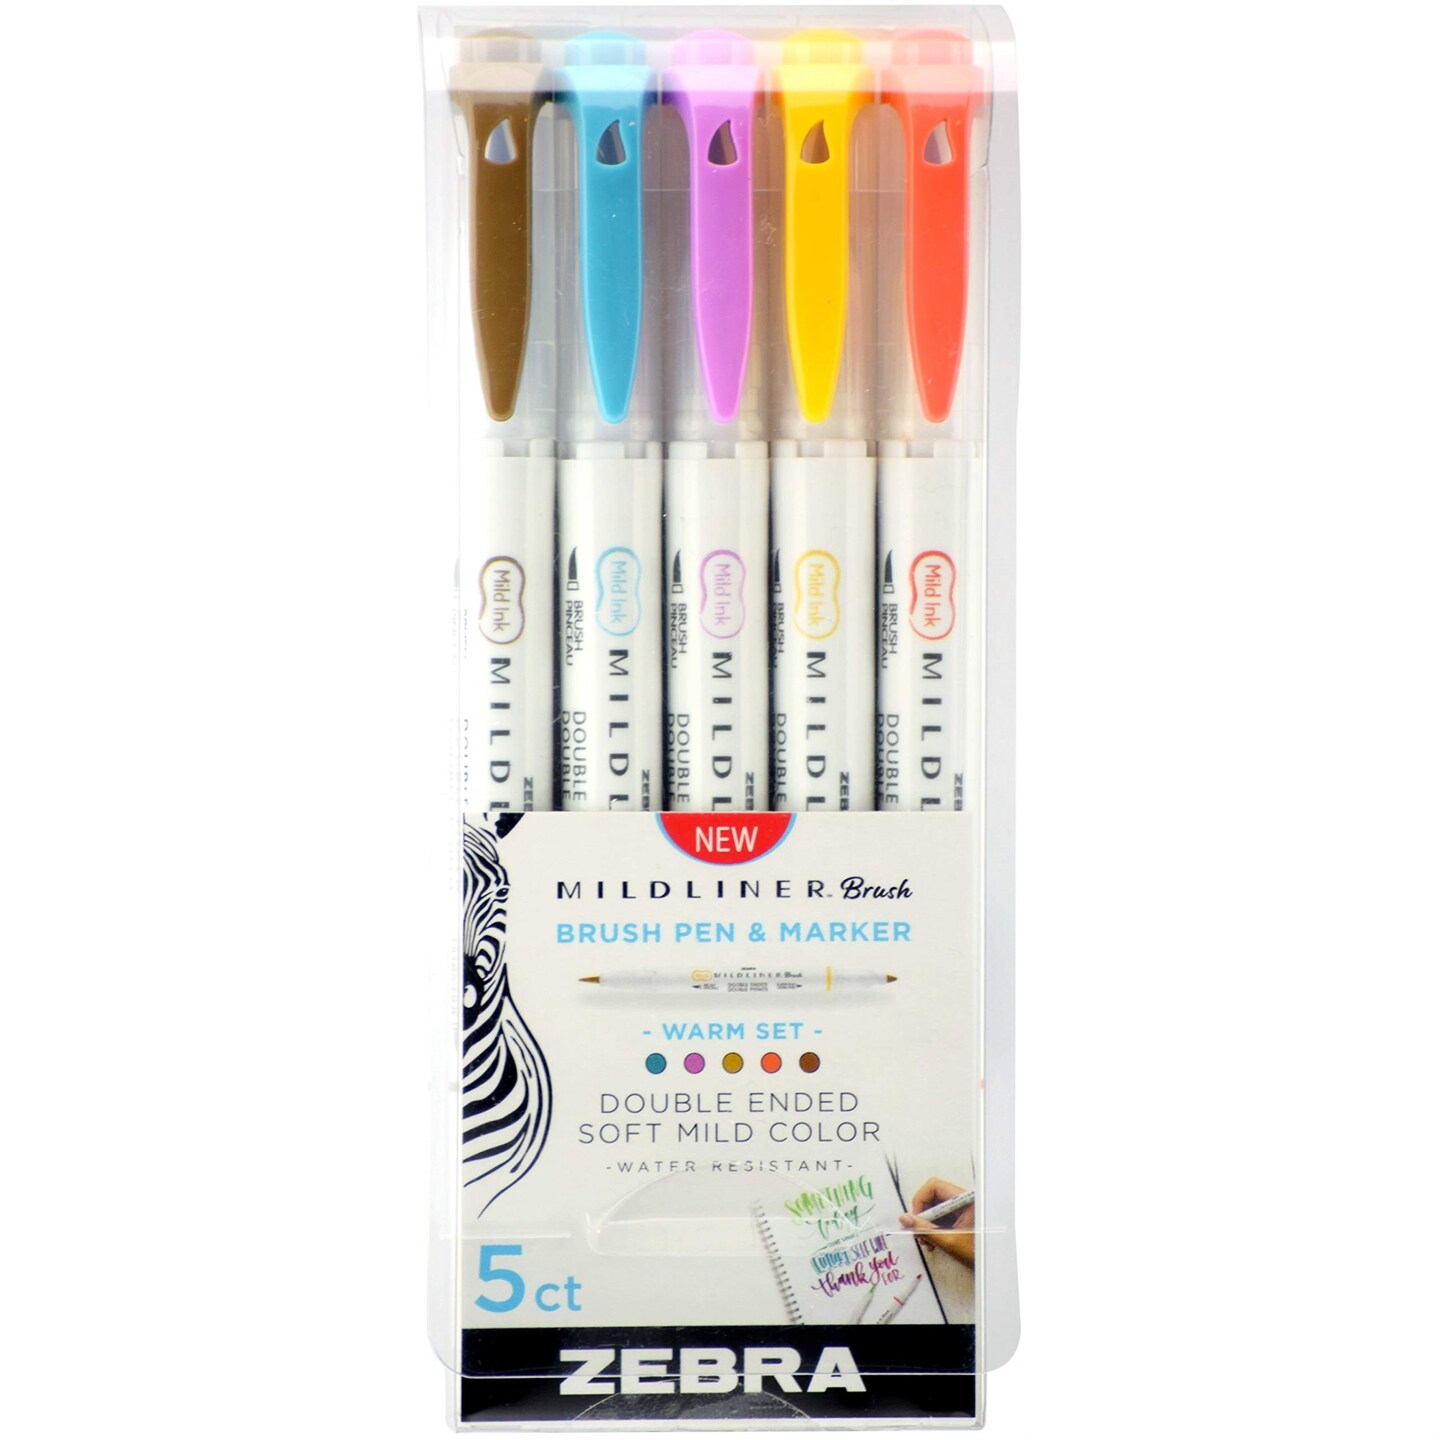 Zebra Midliner Brush Pen & Marker Mild Colors 5-pk Water resistant